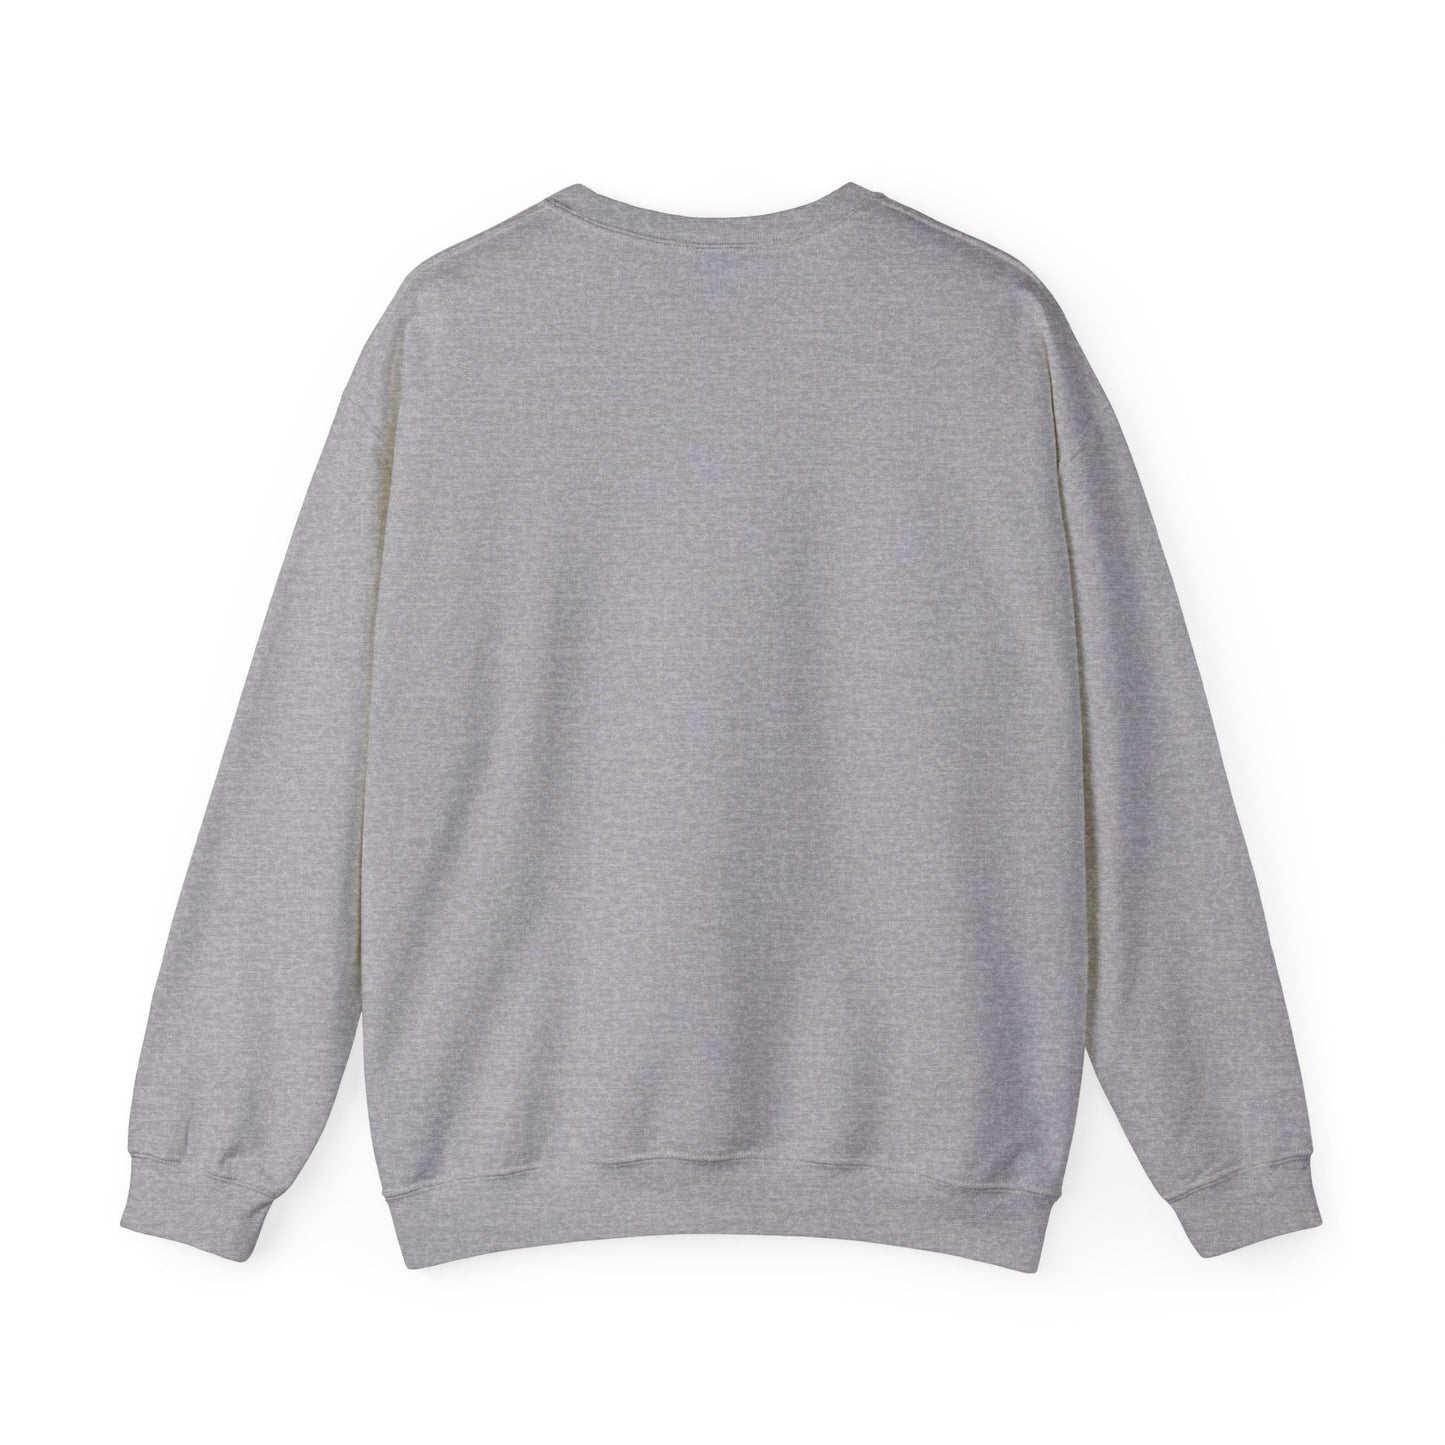 Inspire Wear Crested Unisex Heavy Blend™ Crewneck Sweatshirt